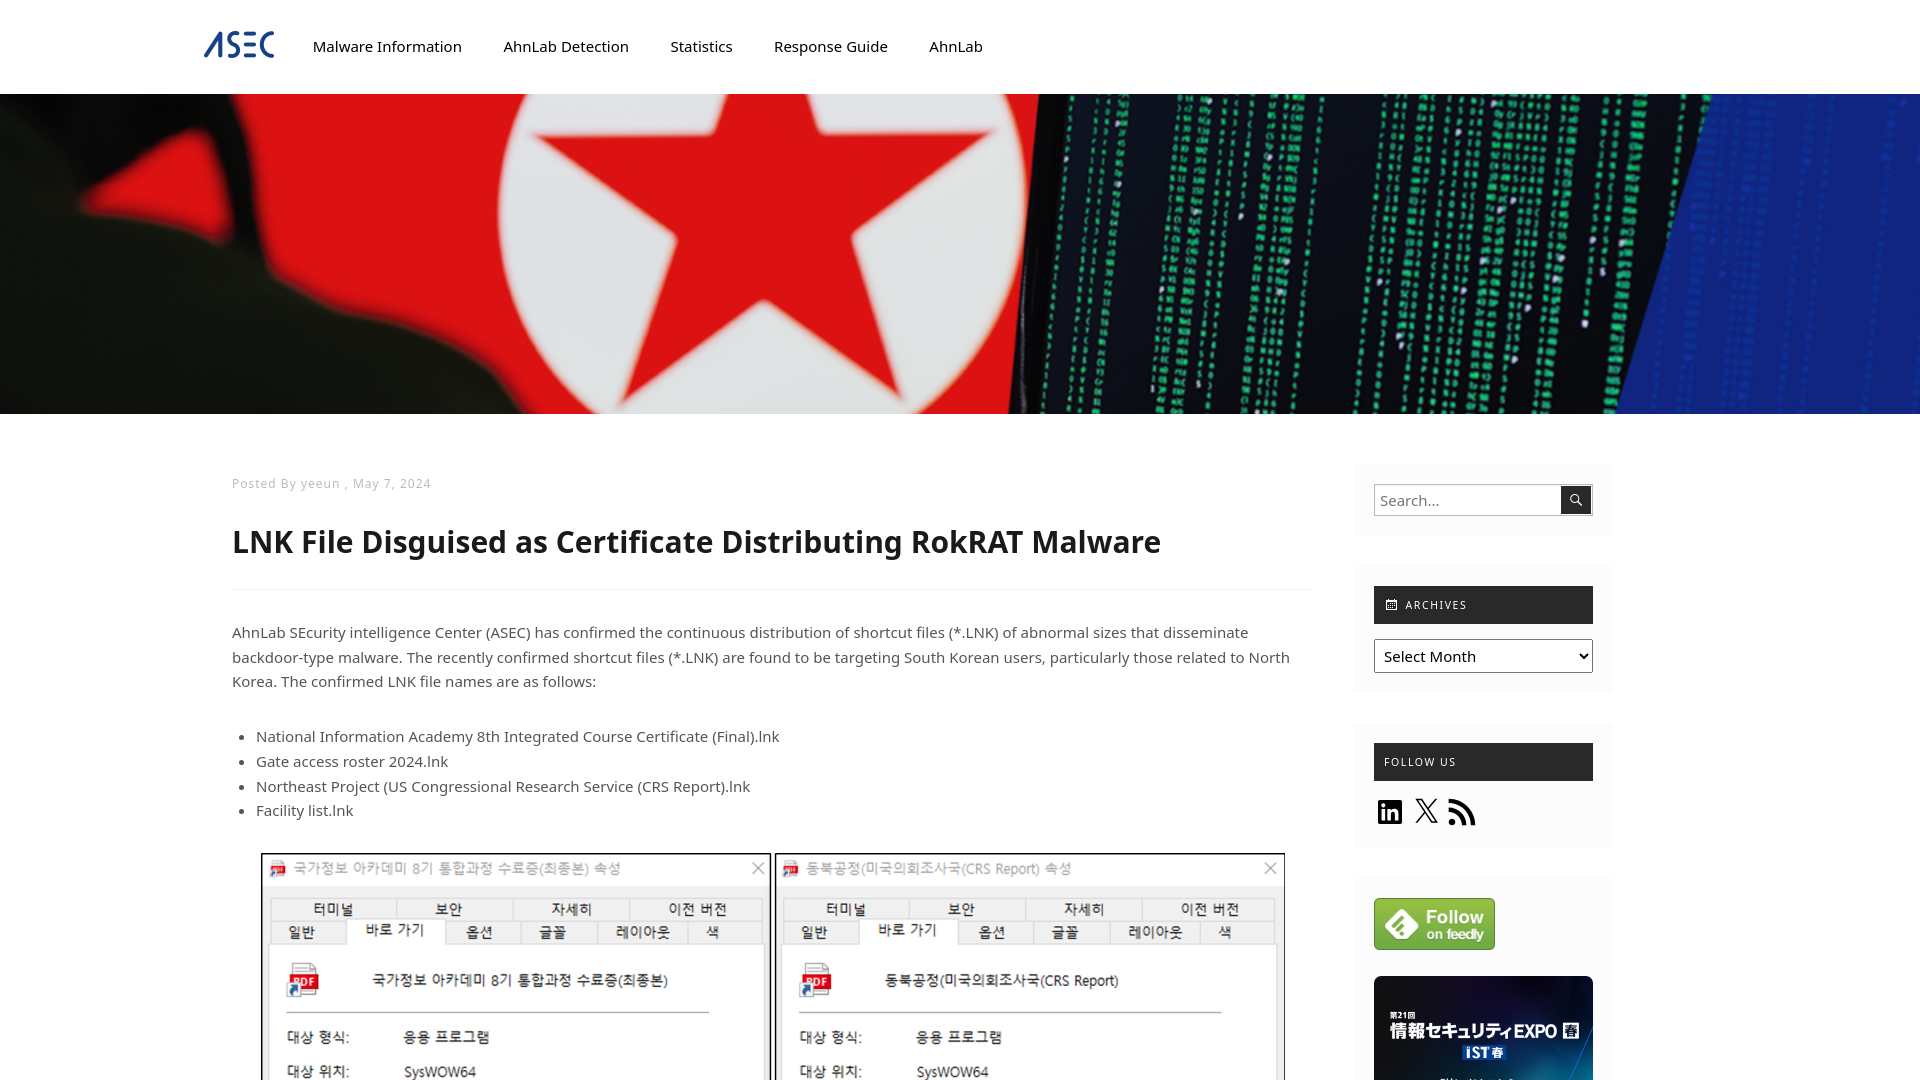 LNK File Disguised as Certificate Distributing RokRAT Malware - ASEC BLOG